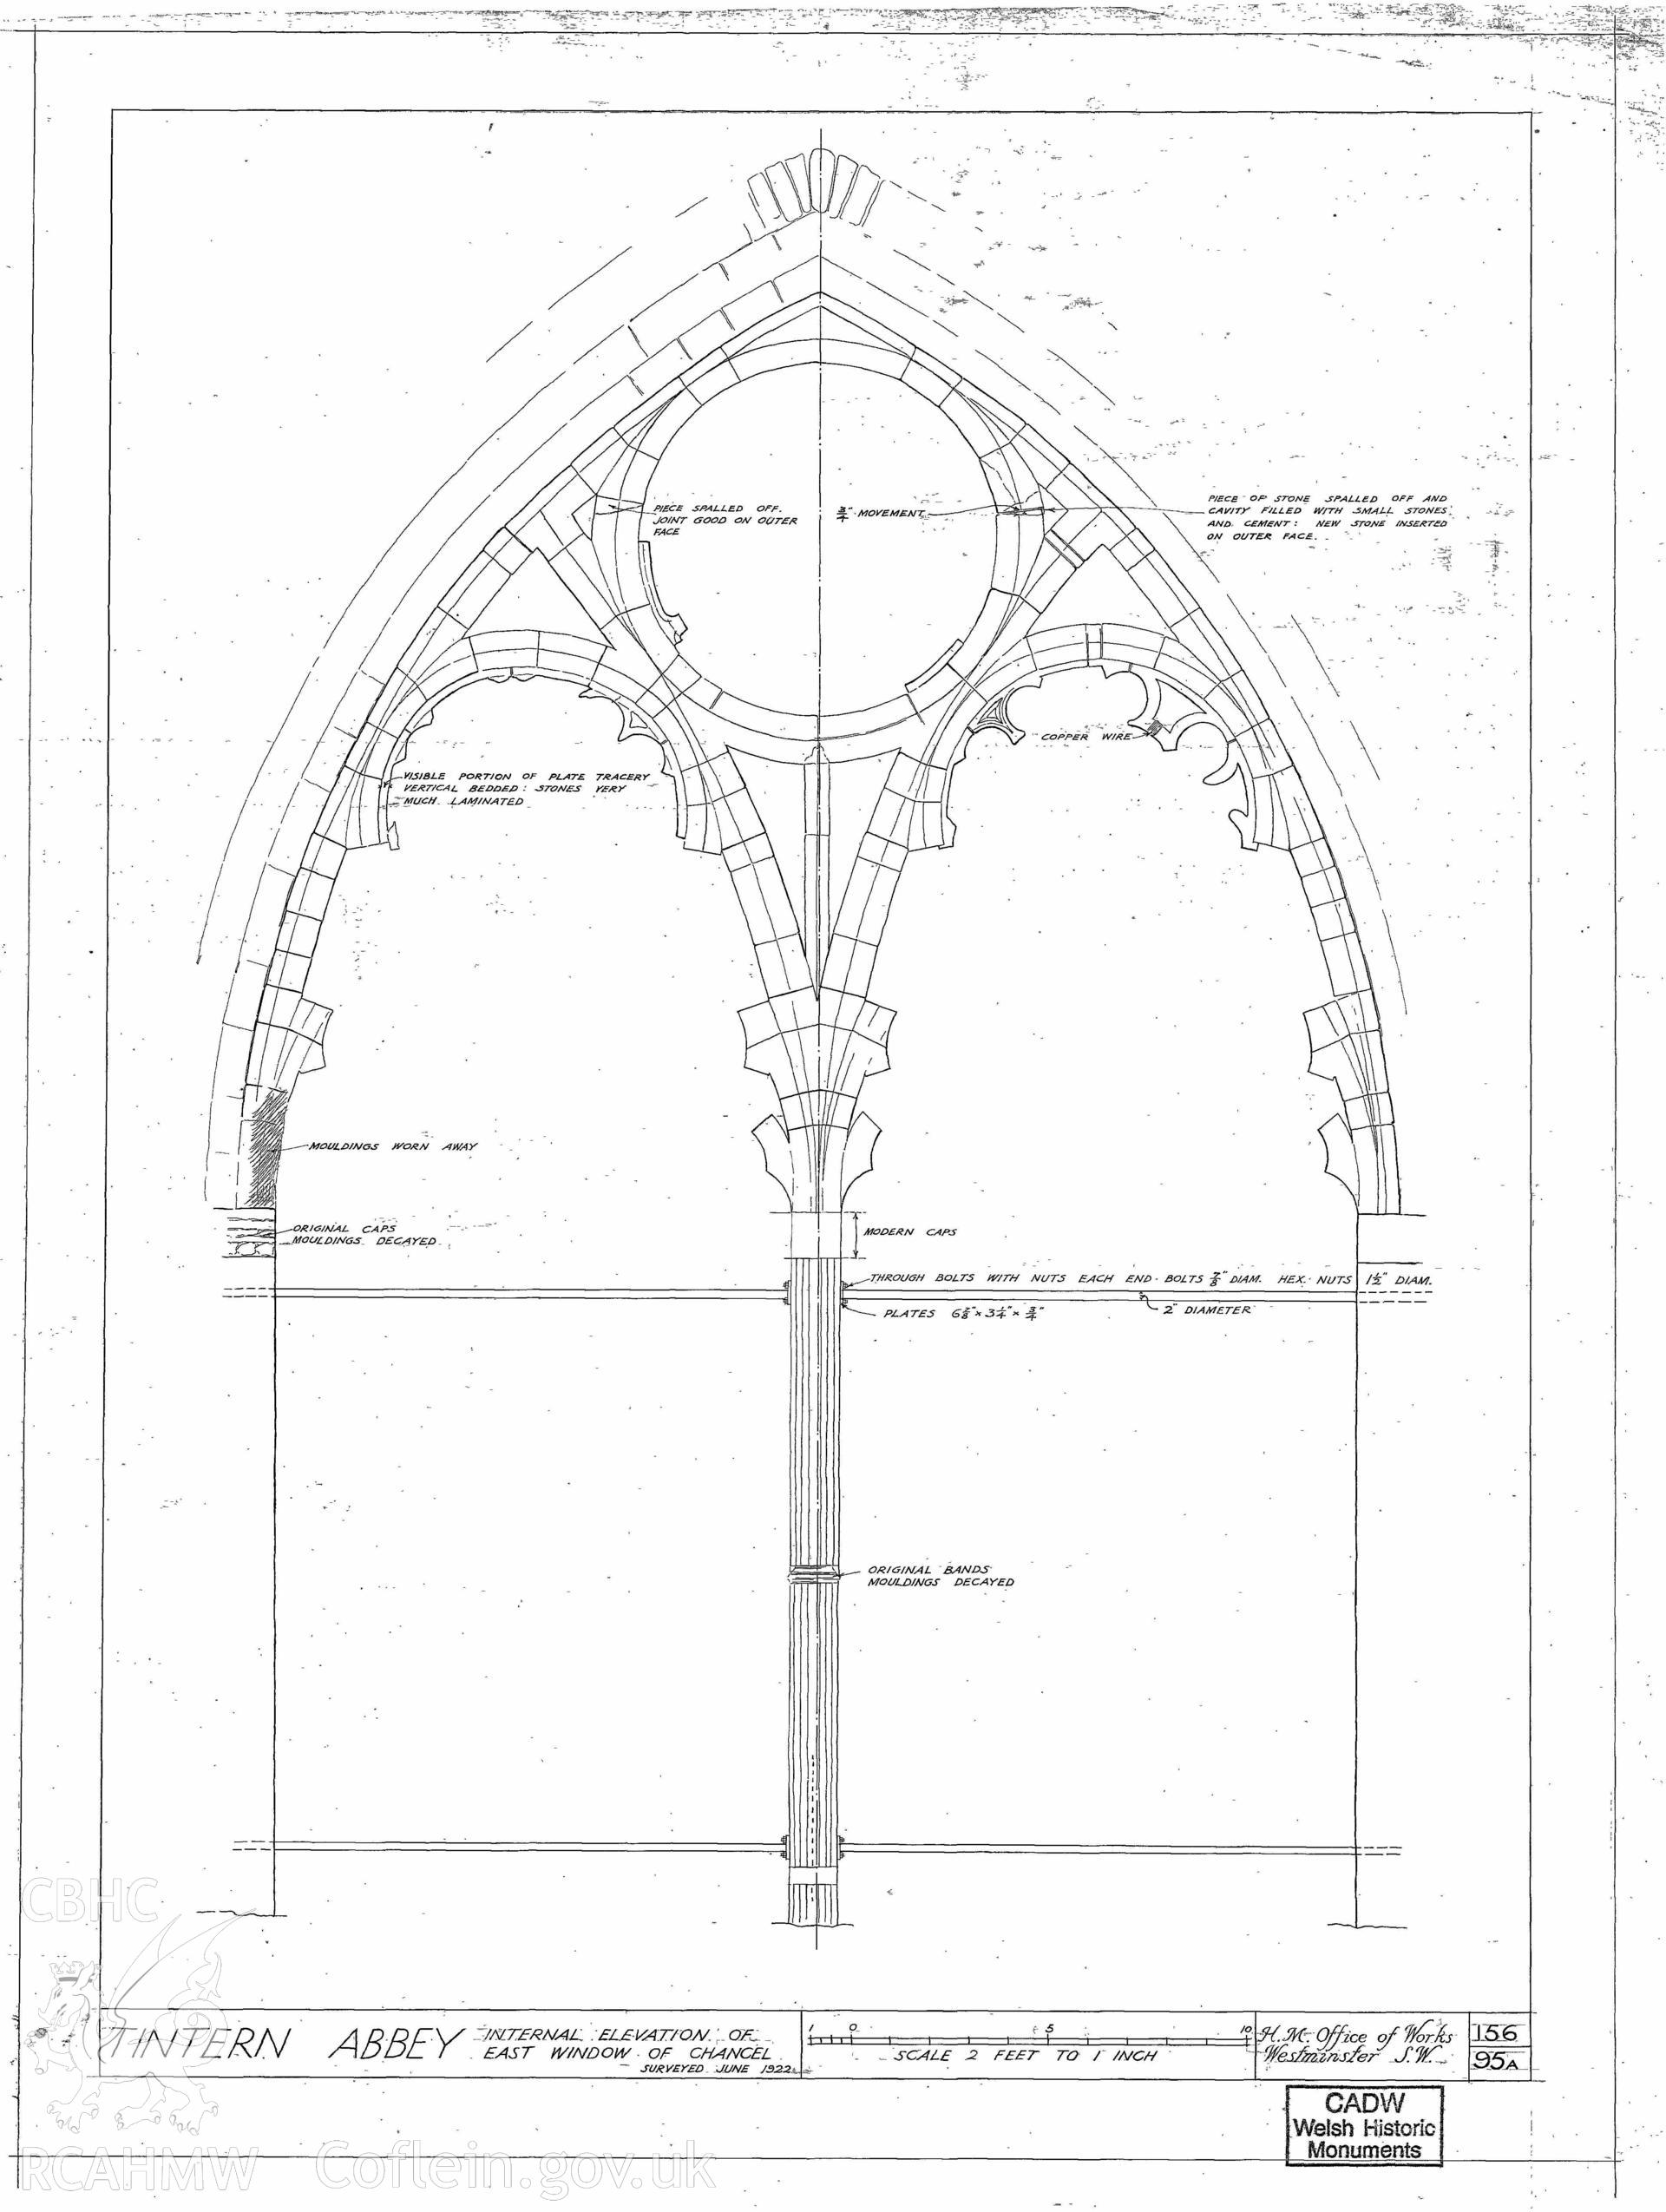 Cadw guardianship monument drawing of Tintern Abbey. Chancel E window, internal elevs. Cadw ref. No. 156/95A. Scale 1:24.